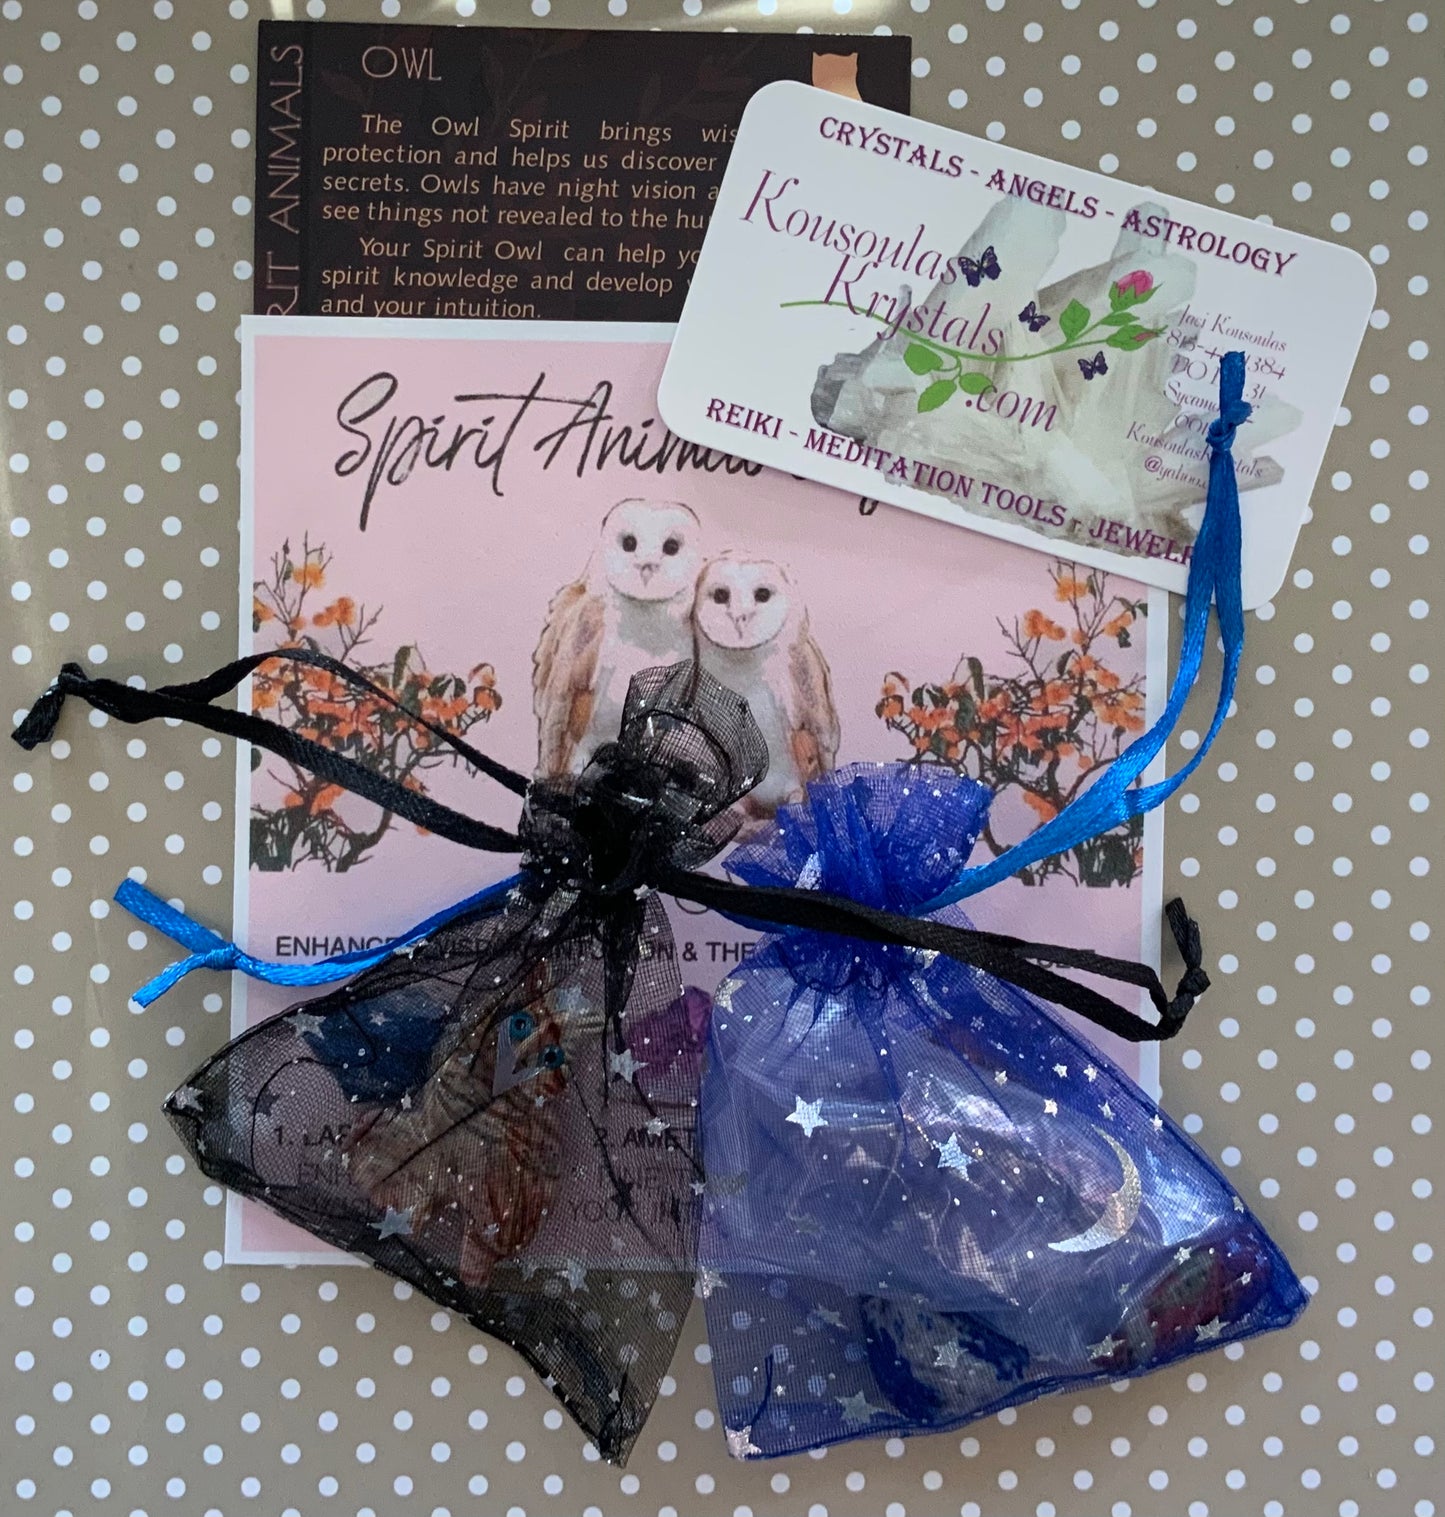 Spirit animal crystal gift set - The Owl